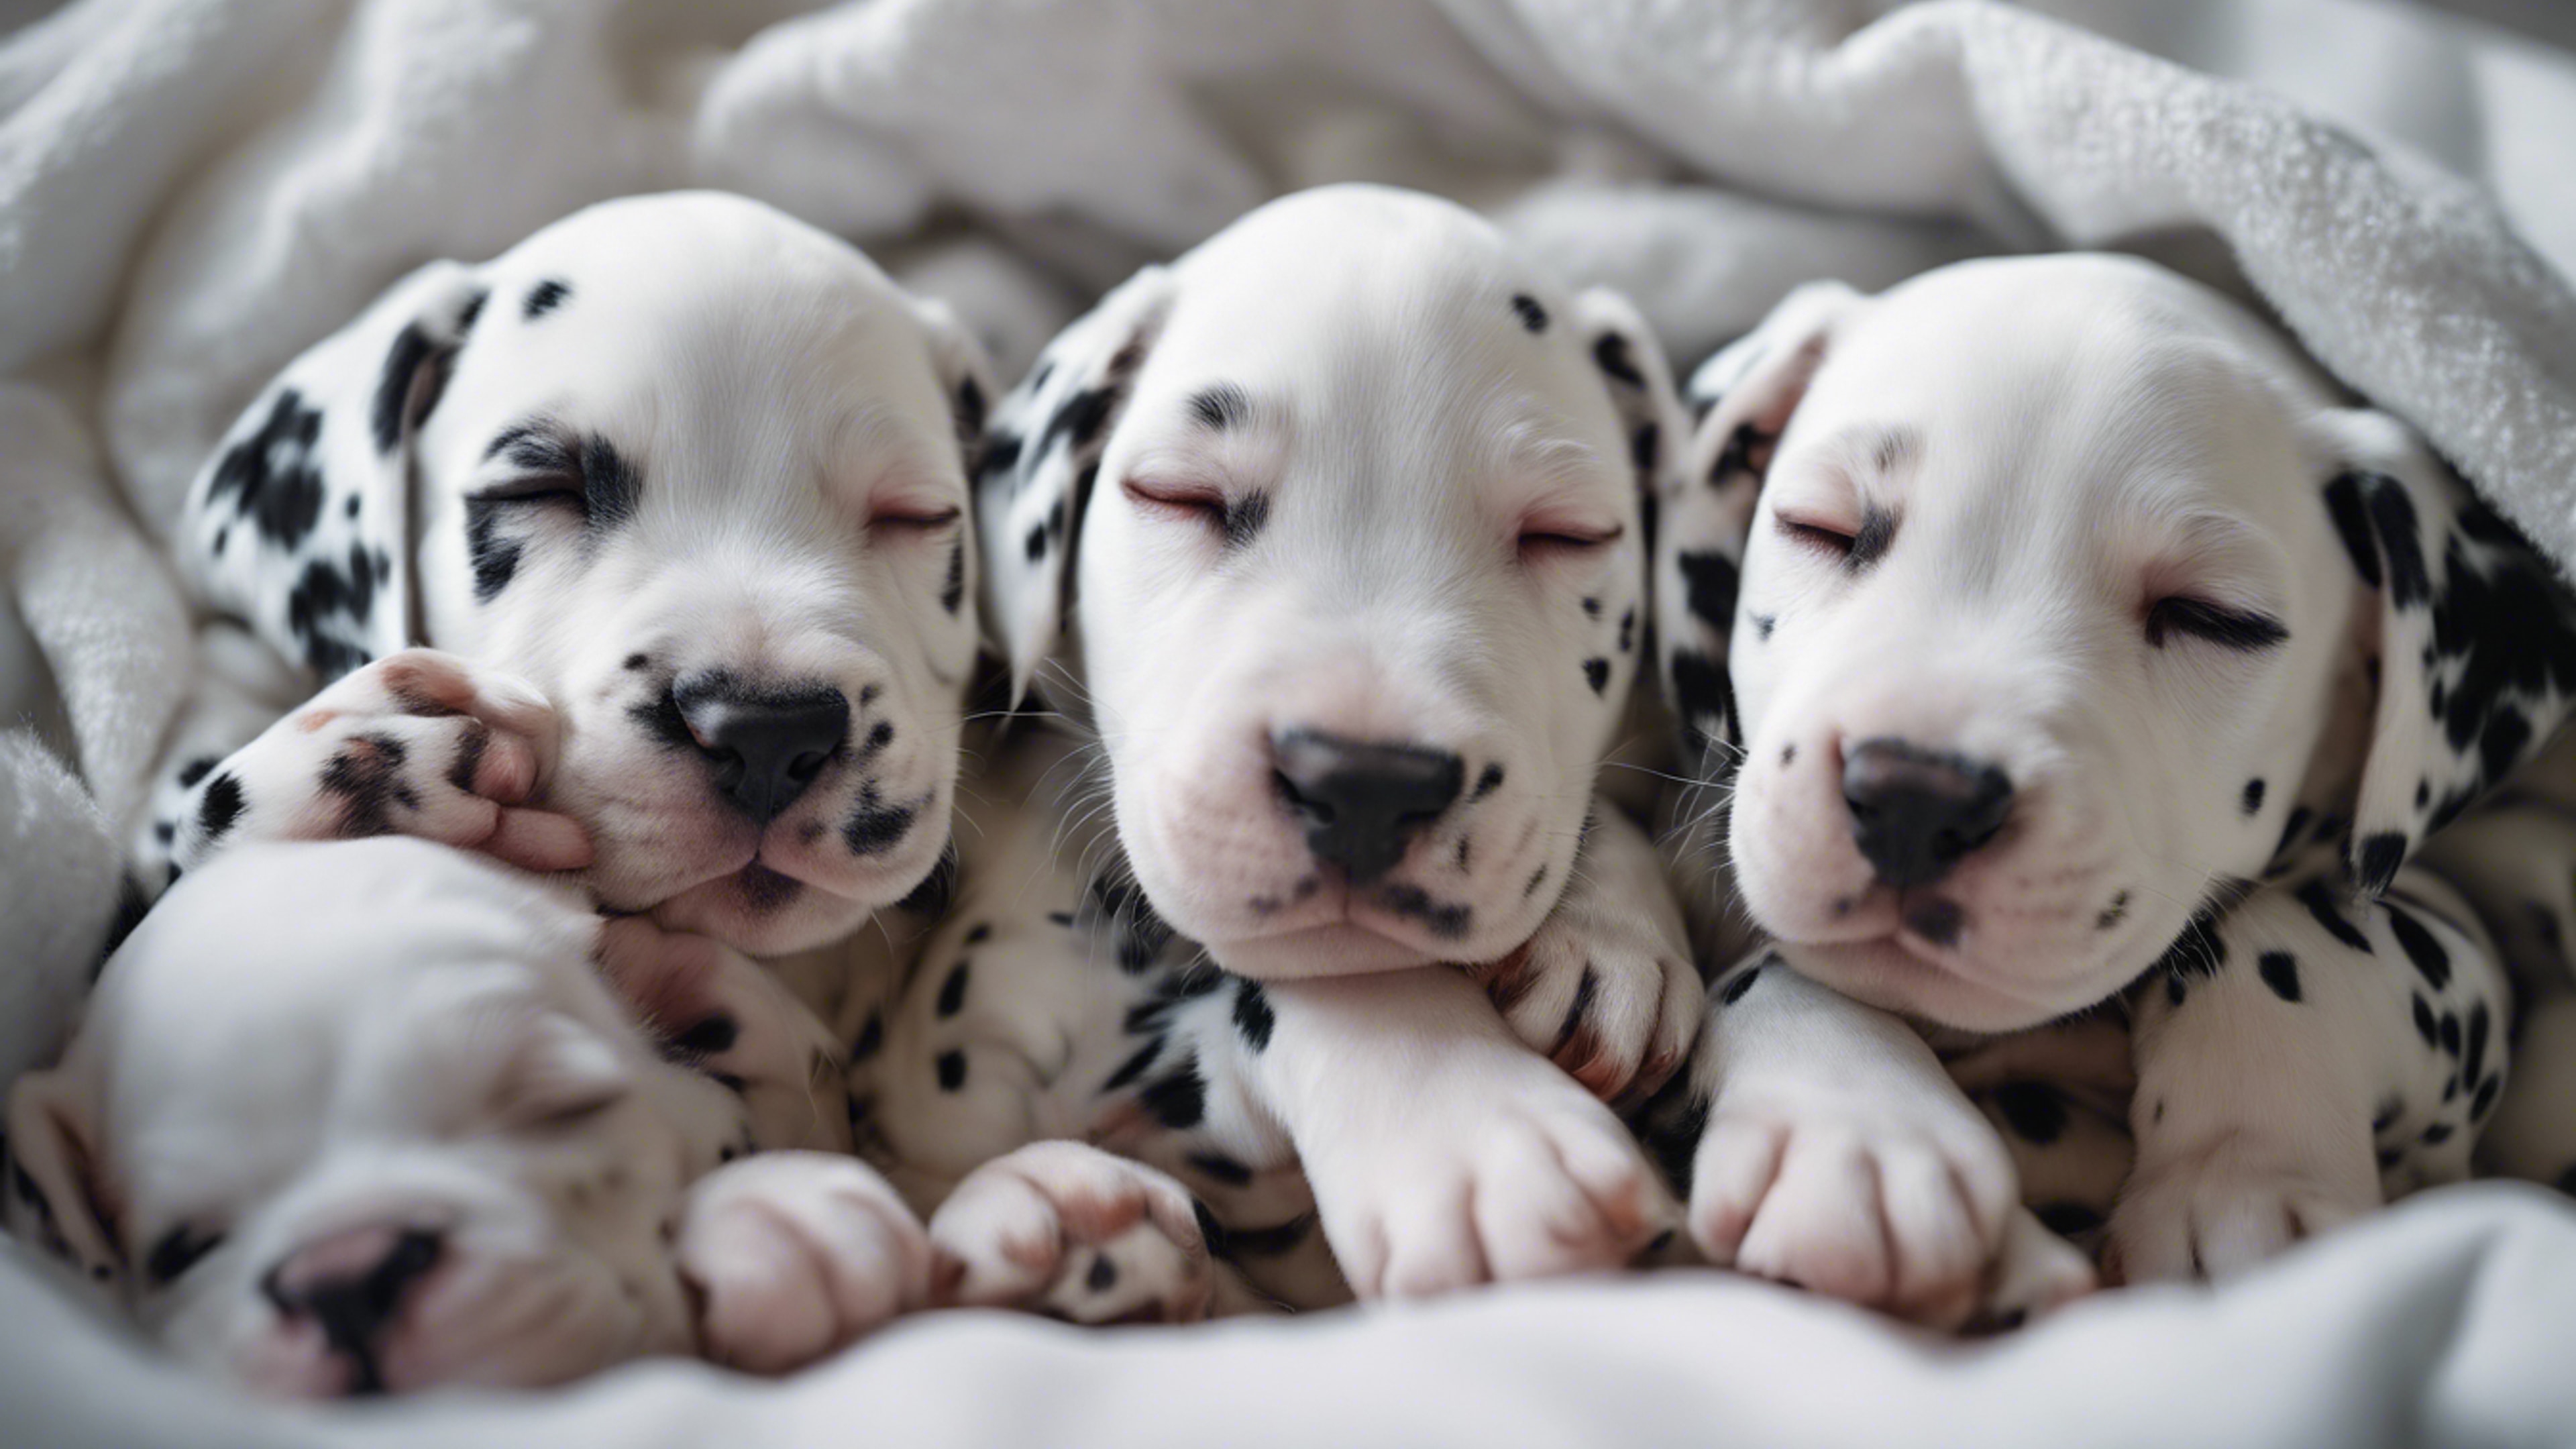 A cluster of sleeping Dalmatian puppies under a cozy white blanket in a nursery room. duvar kağıdı[4a5dc312c1f344509ca9]